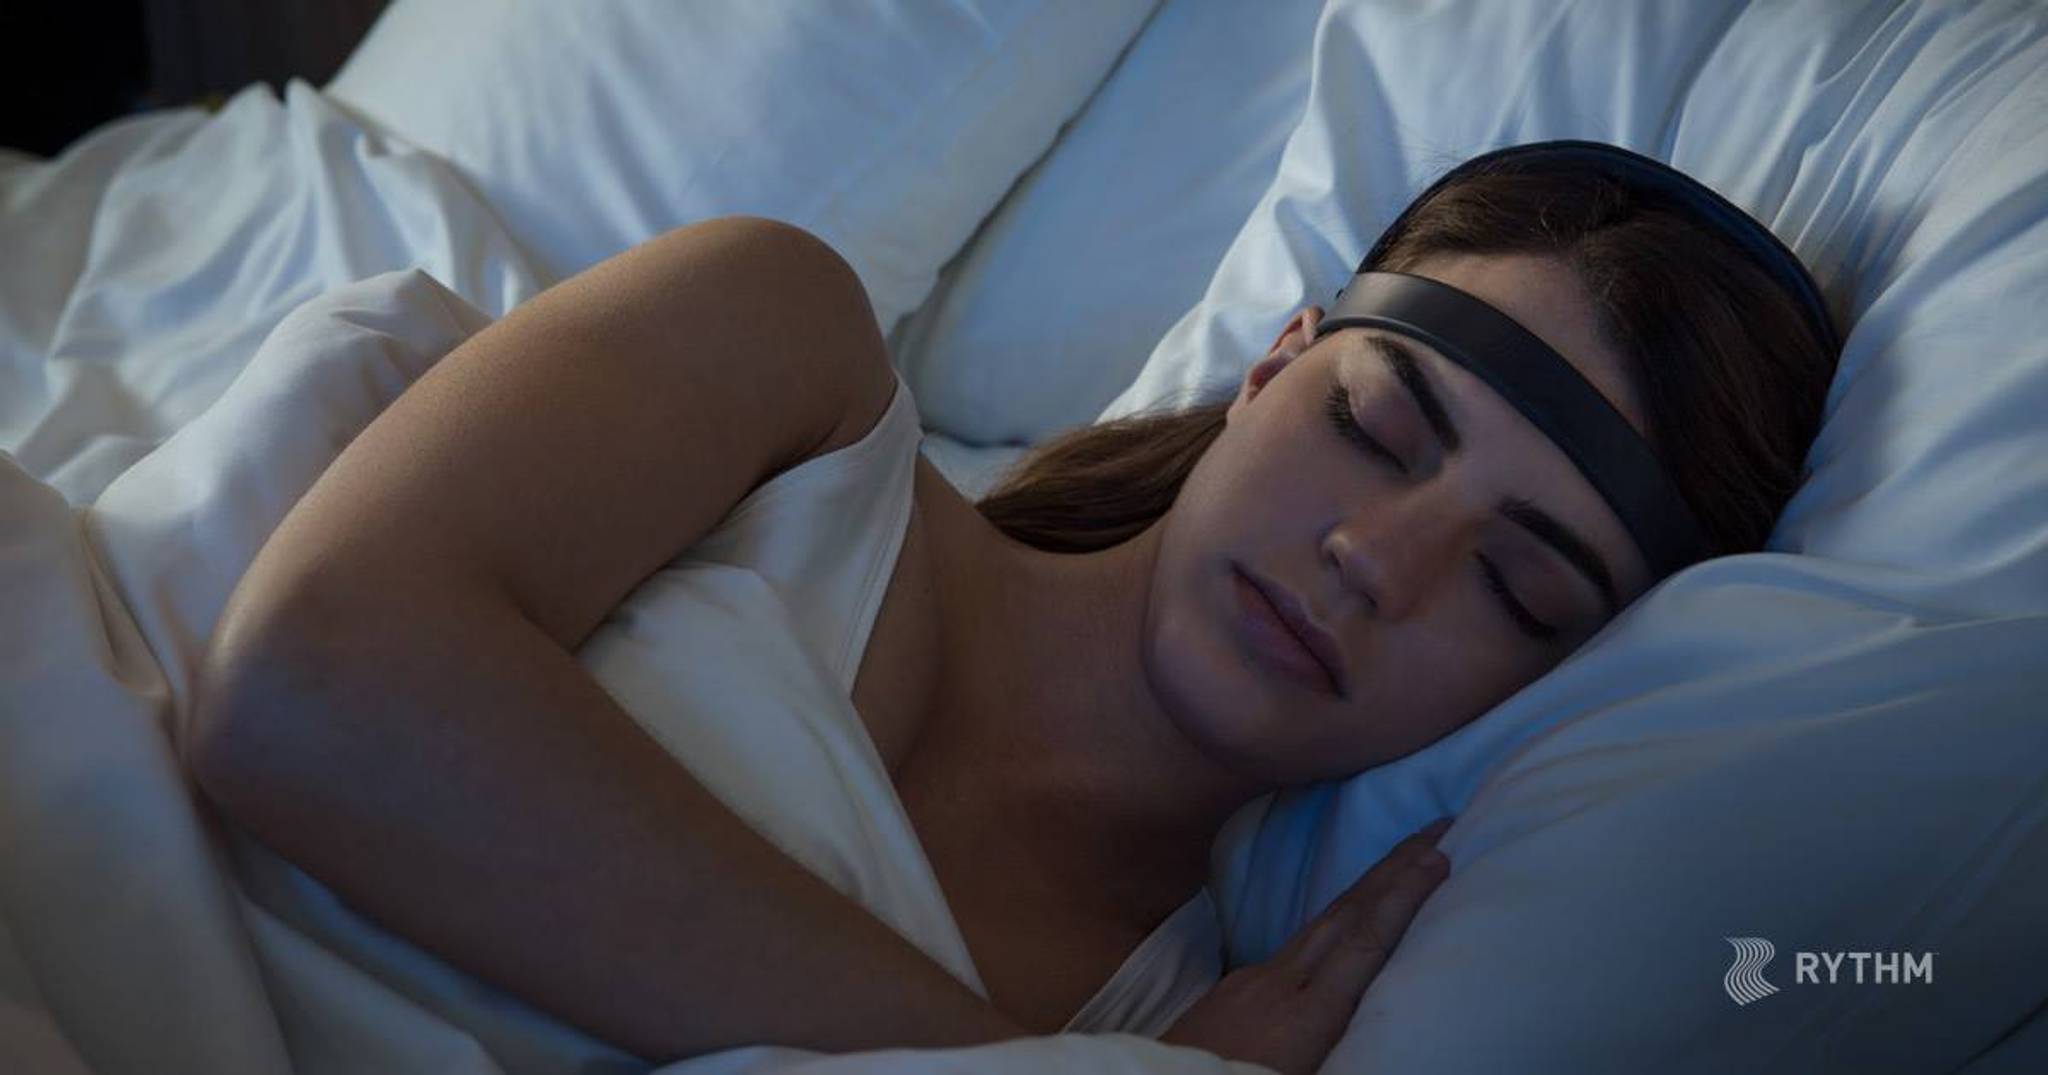 Dreem uses soundwaves to improve your sleep